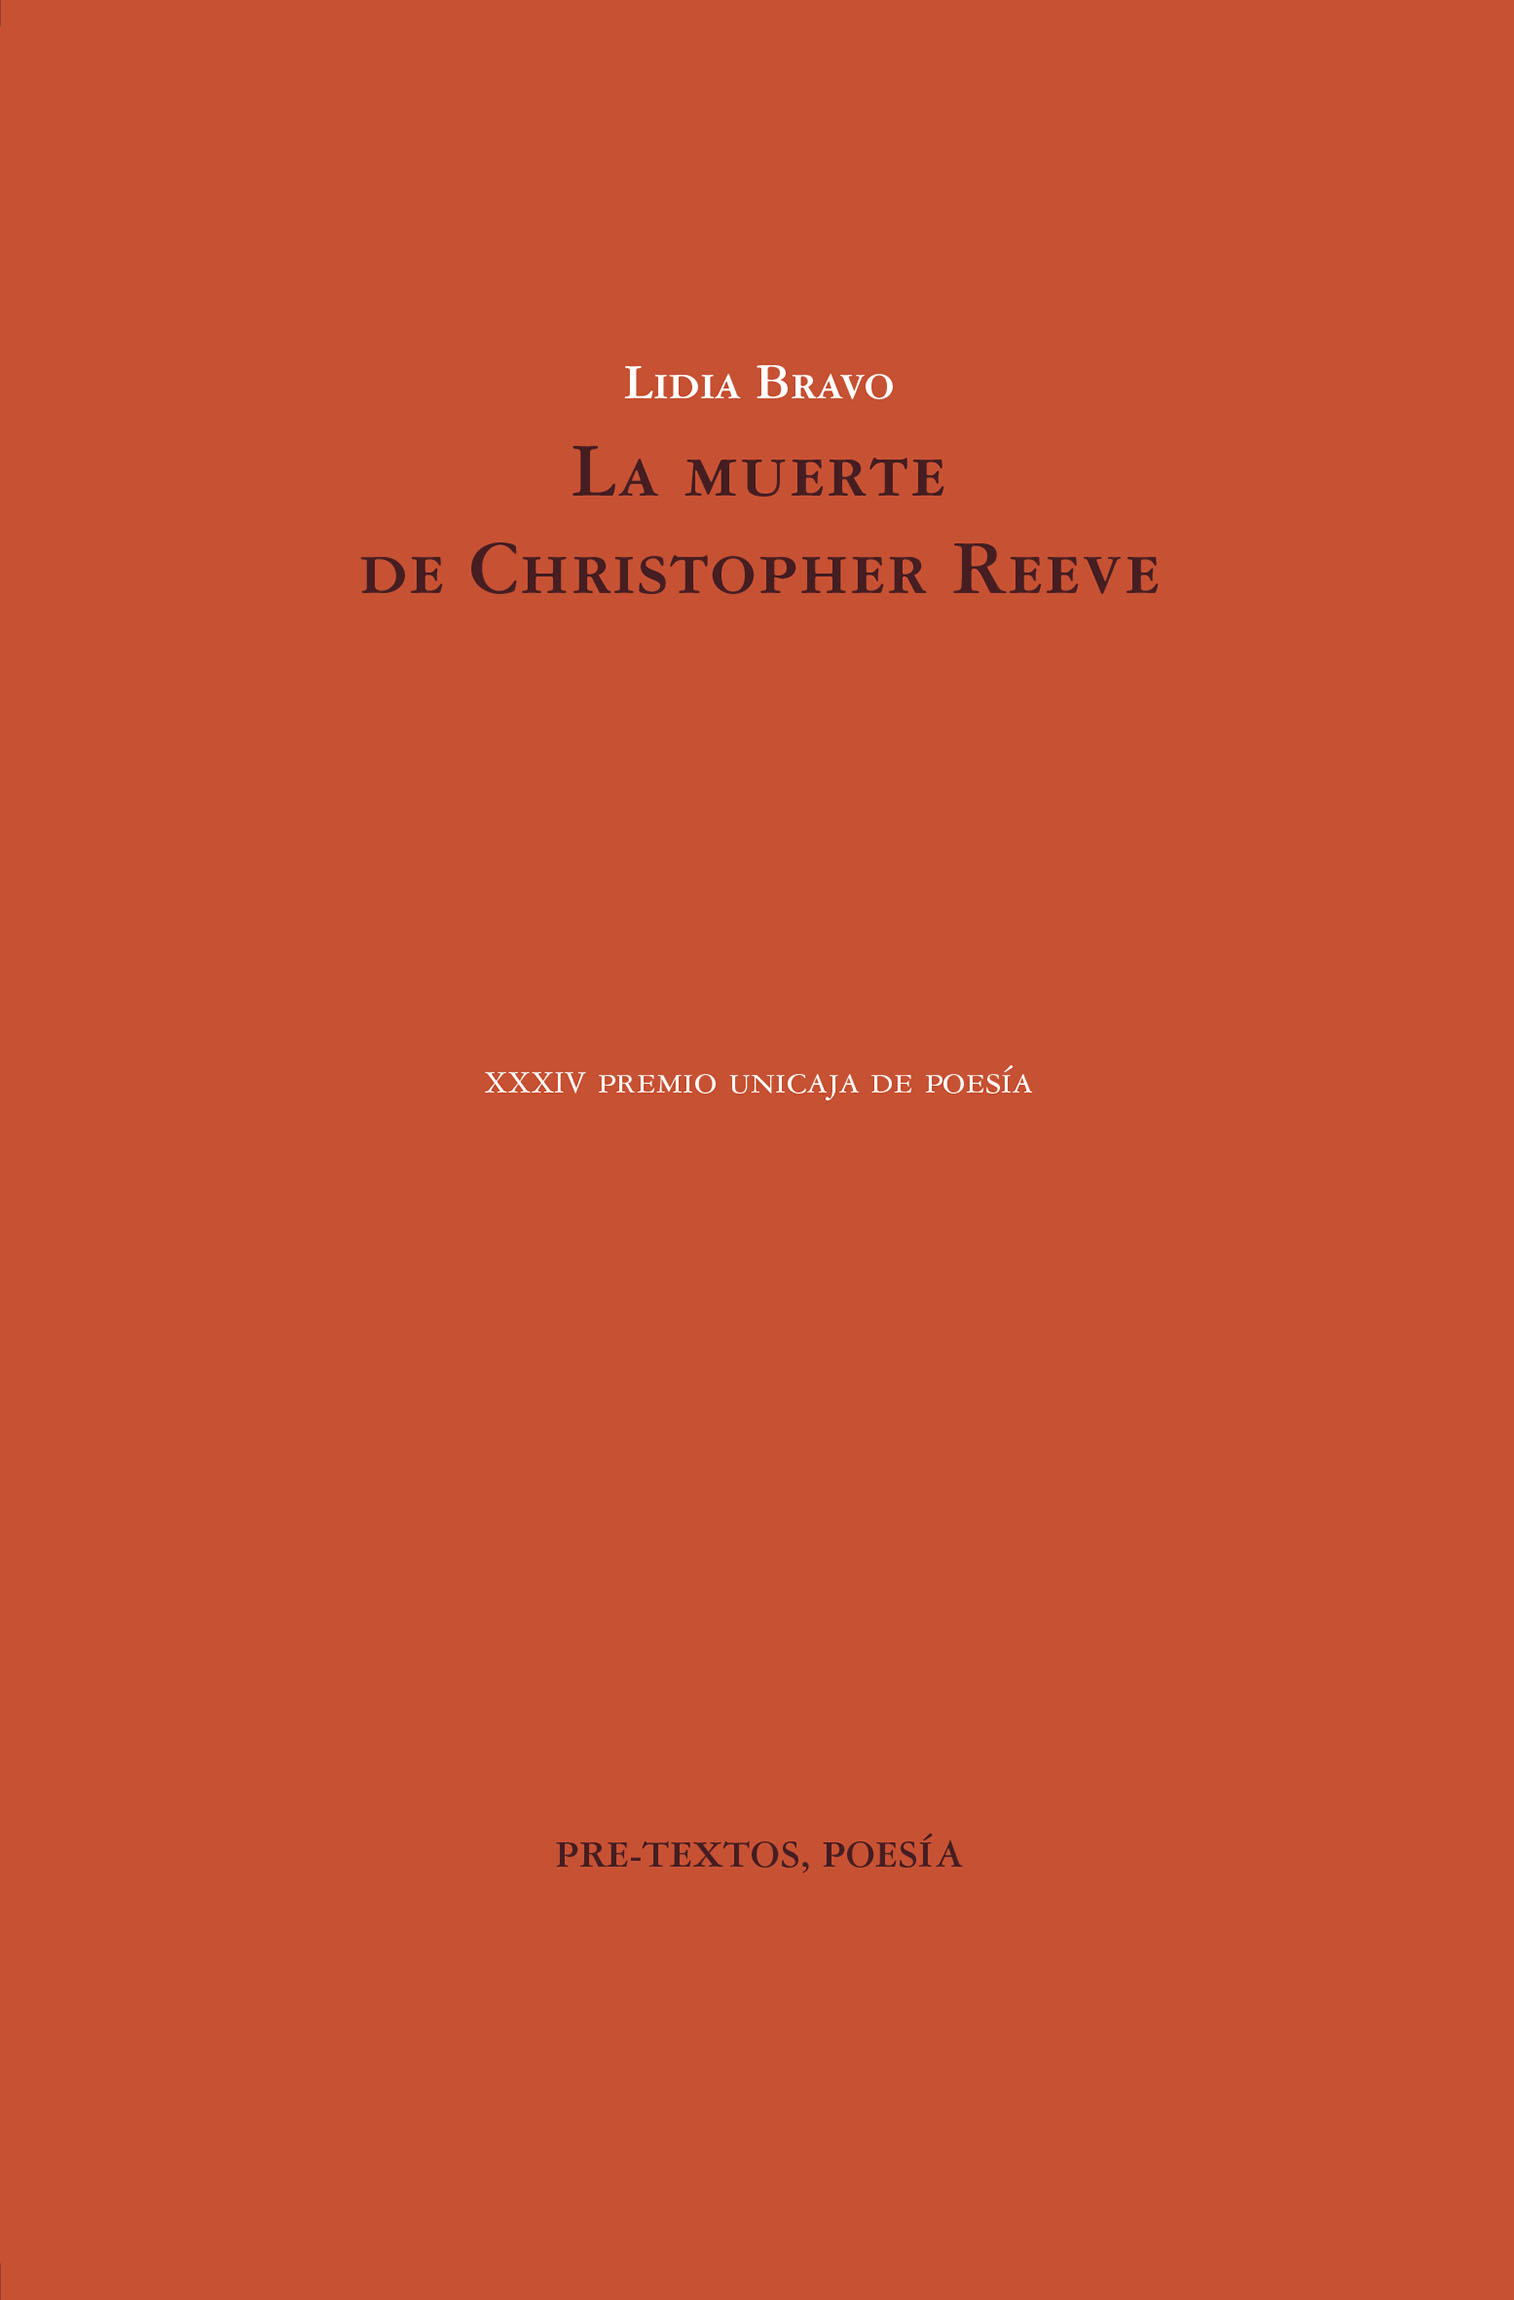 La muerte de Christopher Reeve